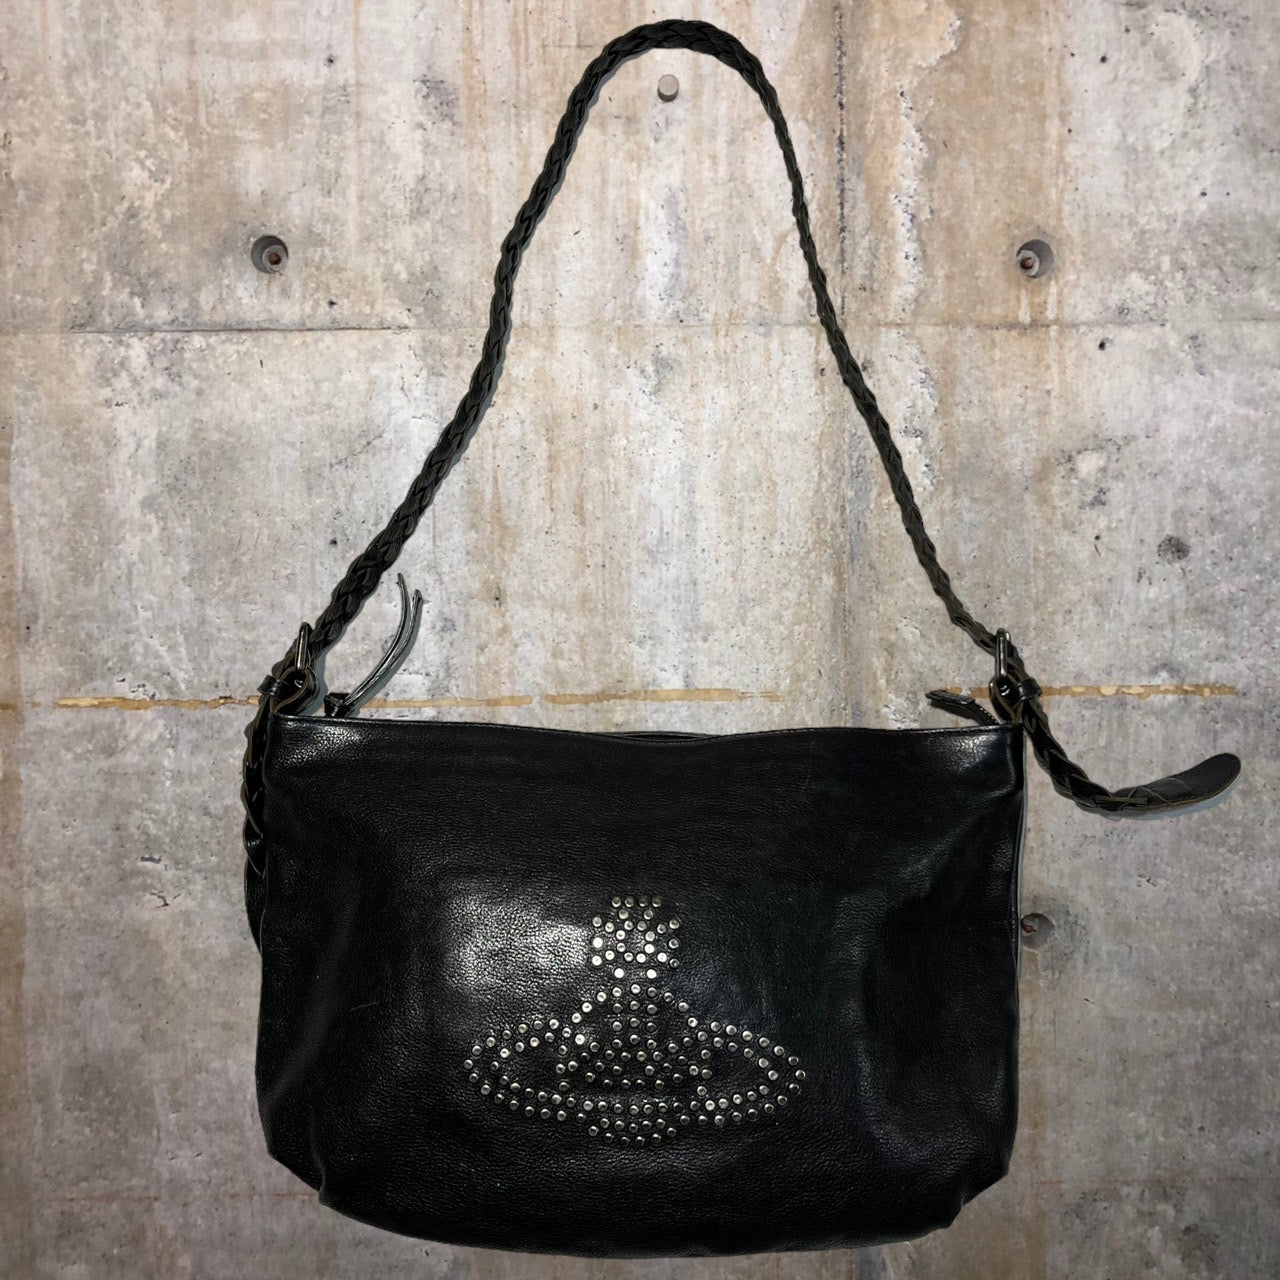 Vivienne Westwood(ヴィヴィアンウエストウッド) orb  studs leather shoulder bag/オーブスタッズレザーショルダーバッグ ブラック